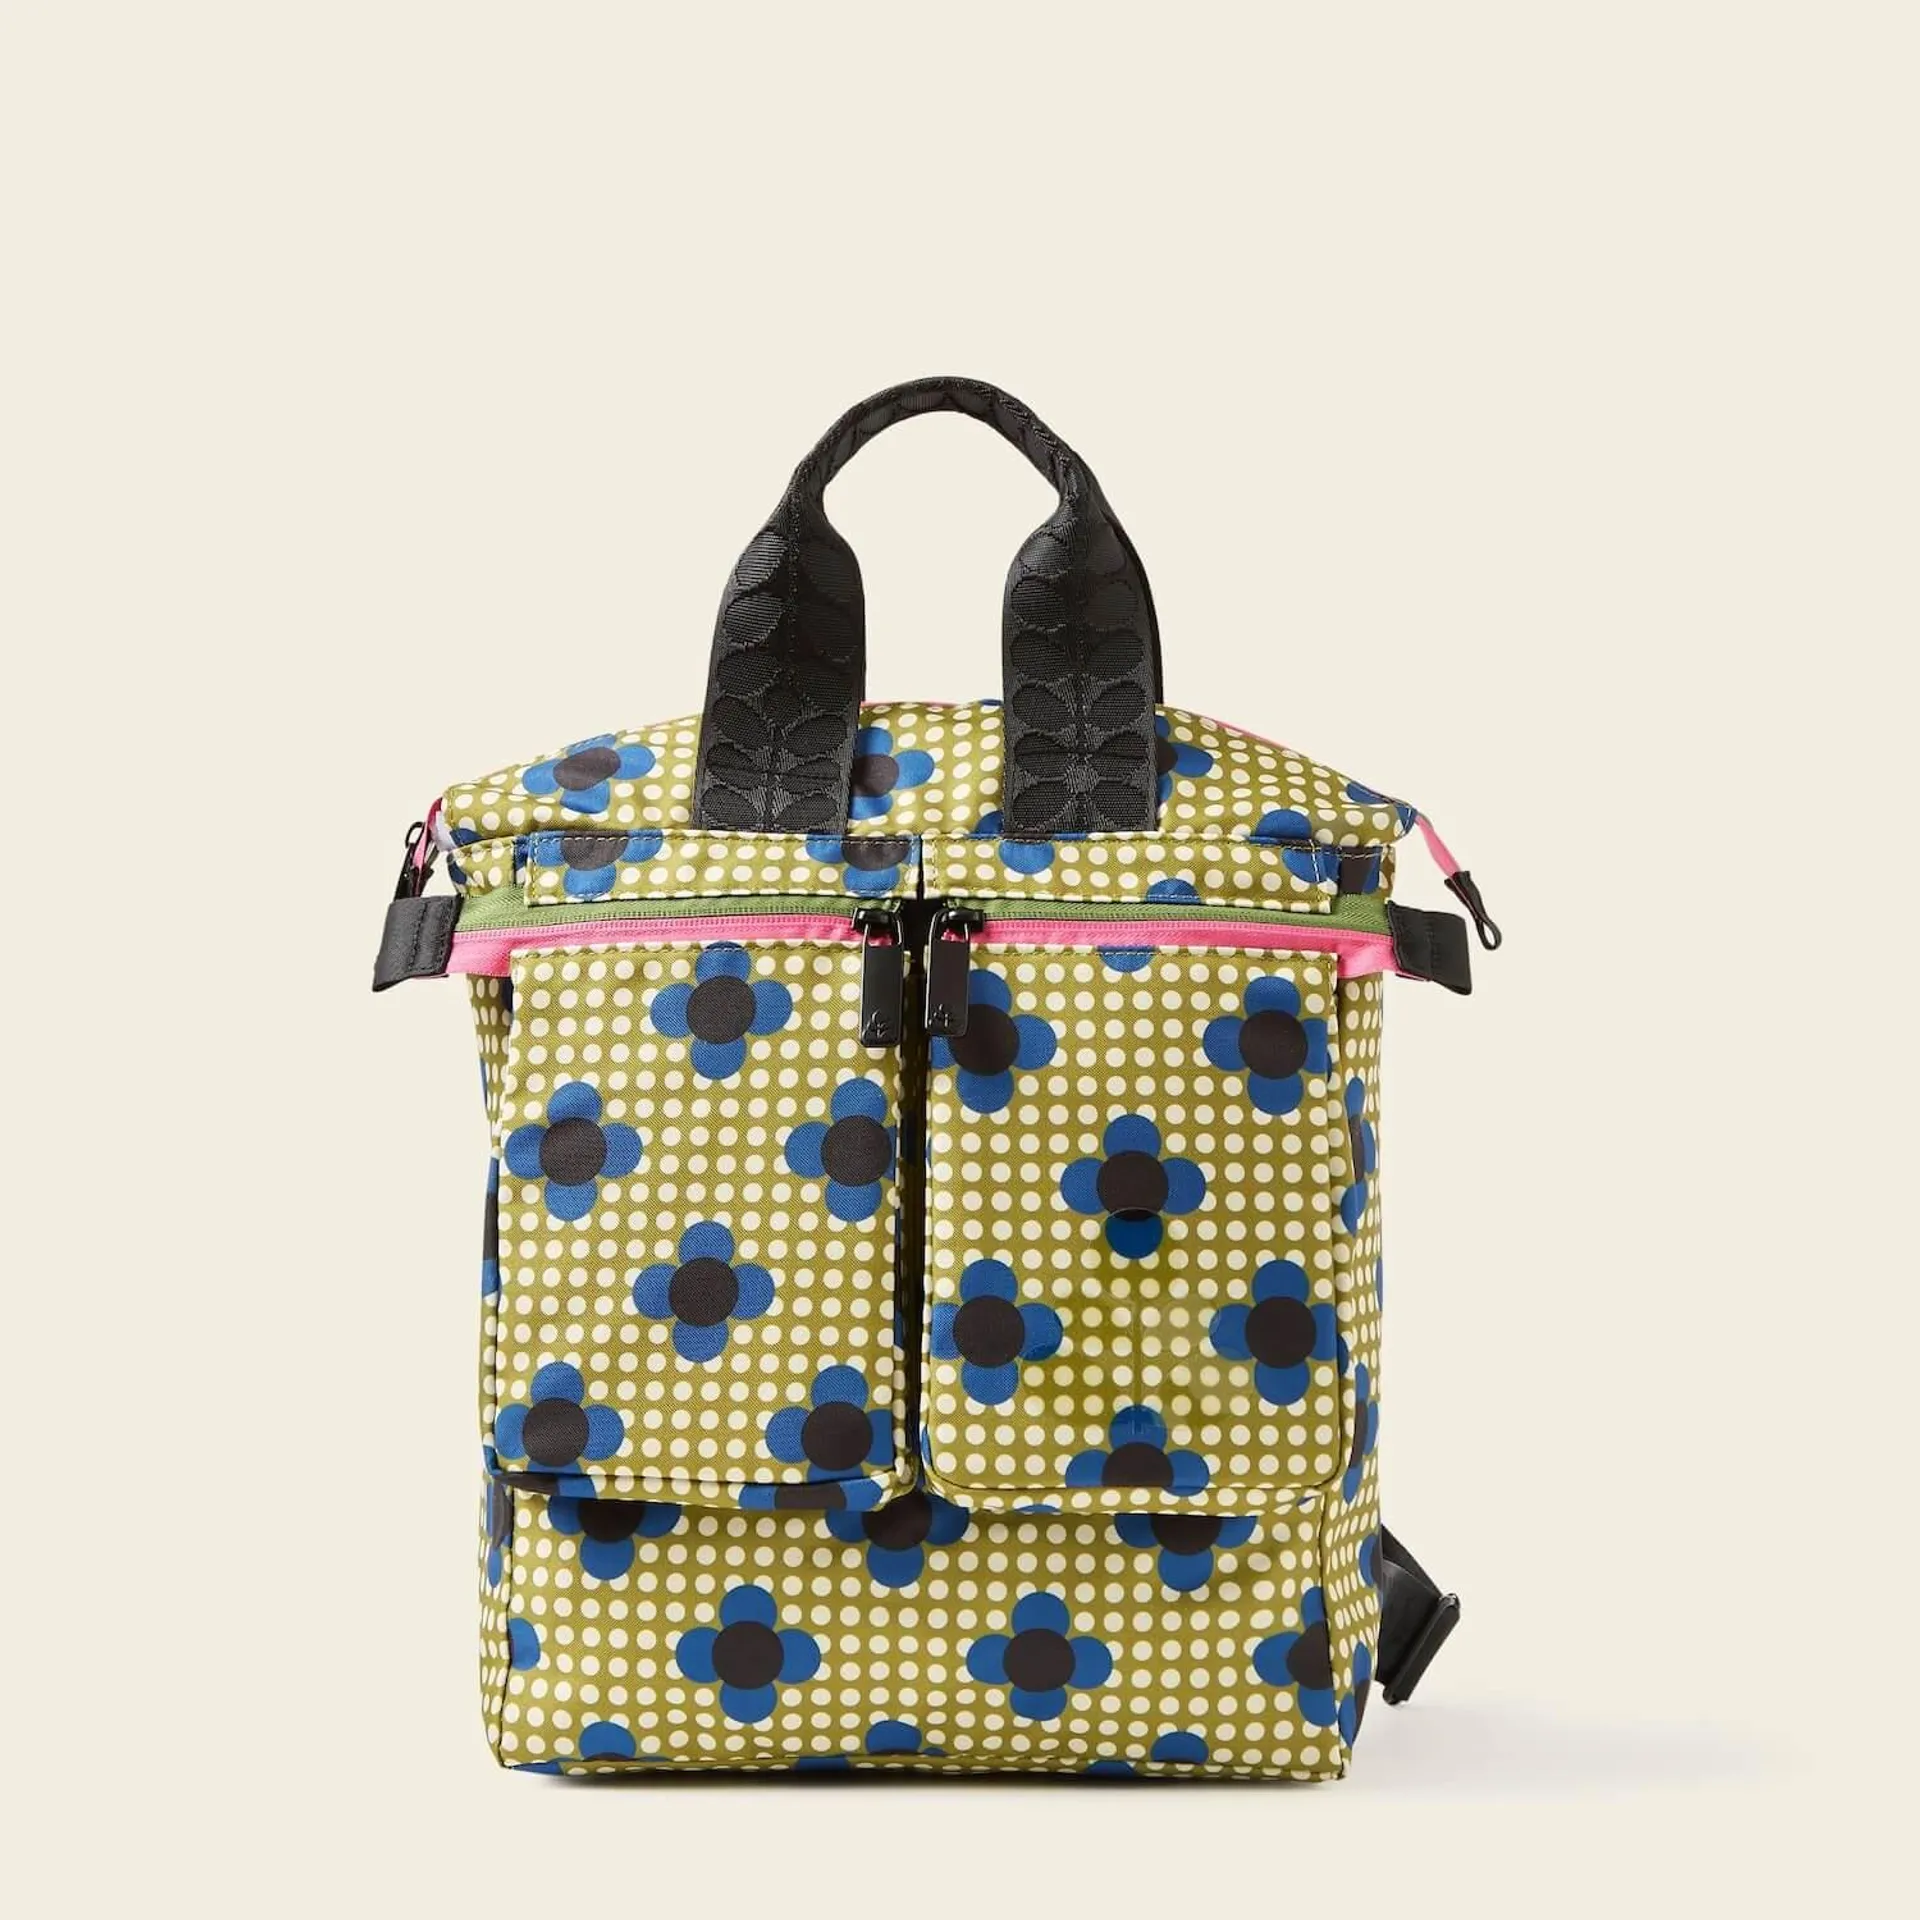 Axis Medium Backpack in Flower Polka Dot Olive